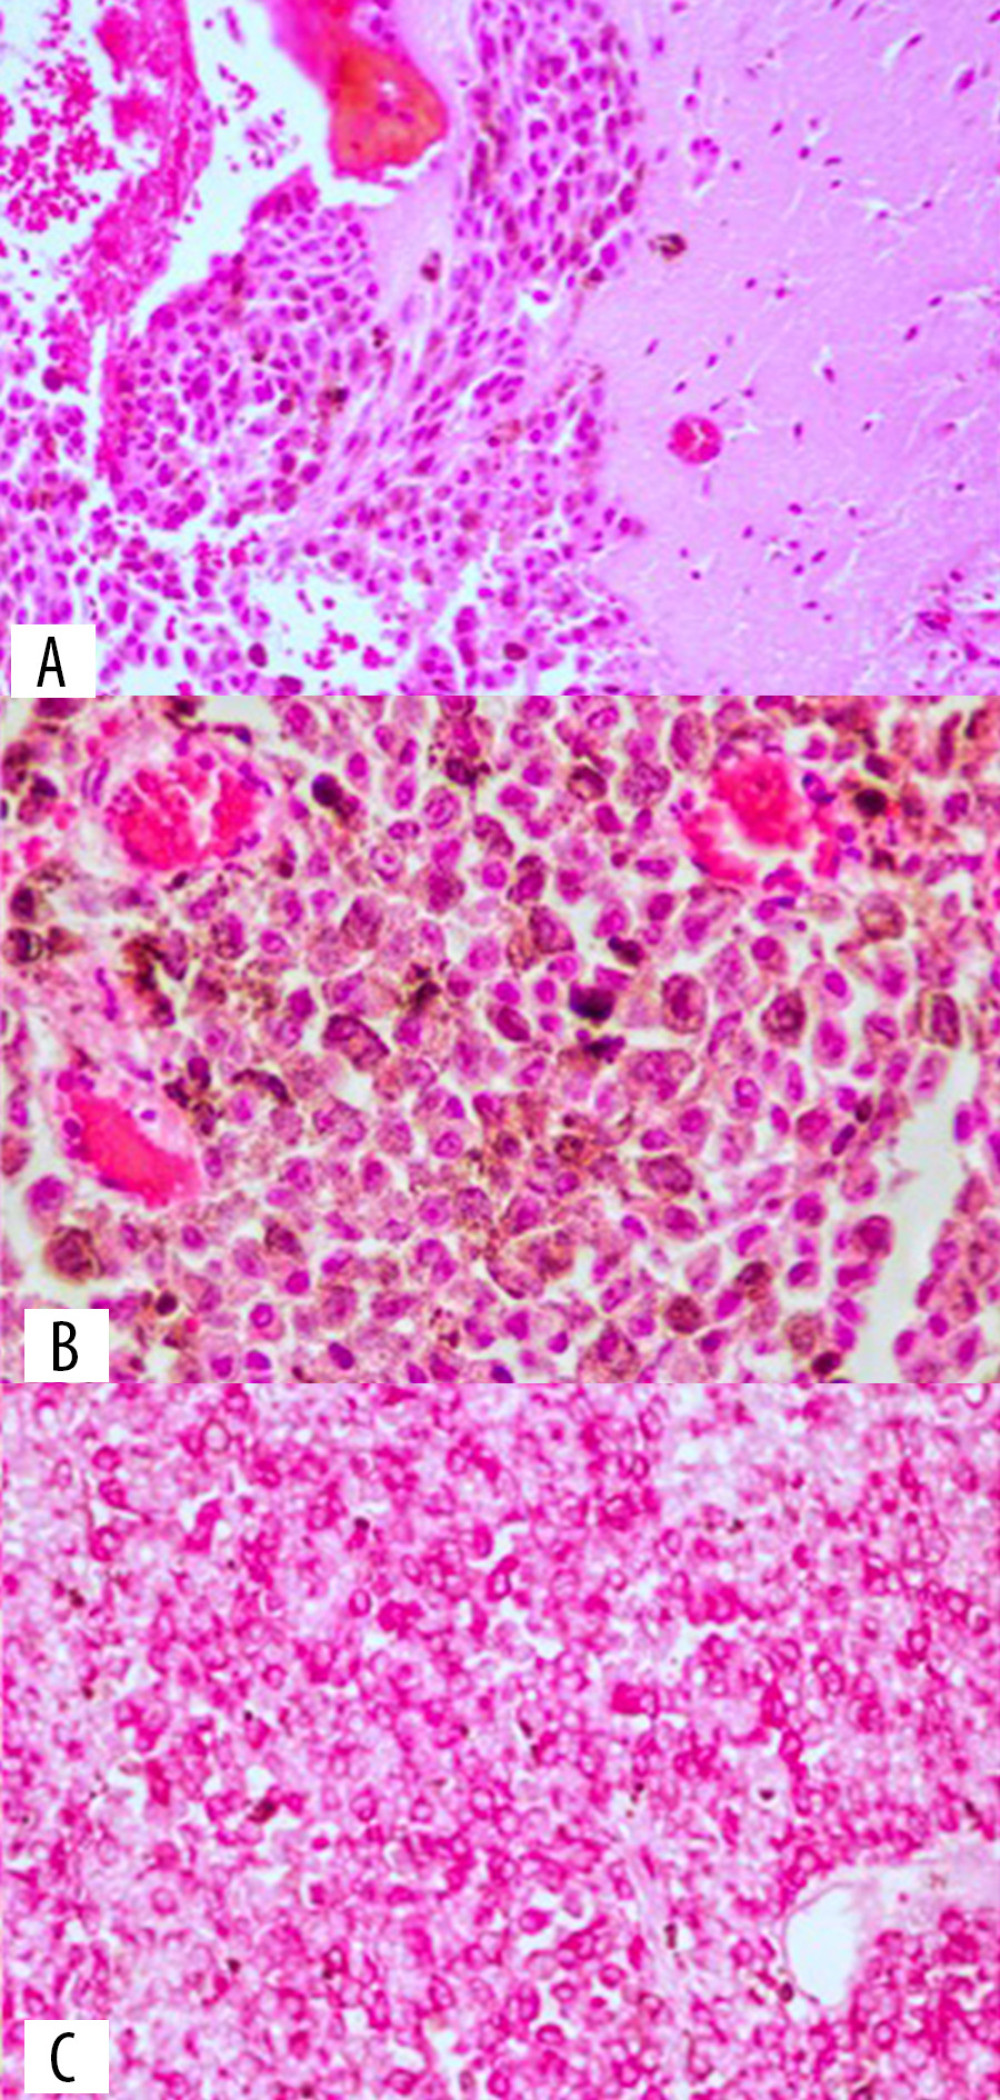 (A) Hematoxylin & eosin (H&E) staining (magnification 20×) shows nests of melanoma cells (left) next to normal brain tissue (right). (B) H&E staining (magnification 40×) shows sheets of malignant melanocytes with prominent eosinophilic nucleoli and dense melanin pigmentation. (C) Magnification (magnification 20×) shows a positive cytoplasmic immunoreaction to HMB45 (red chromophore).